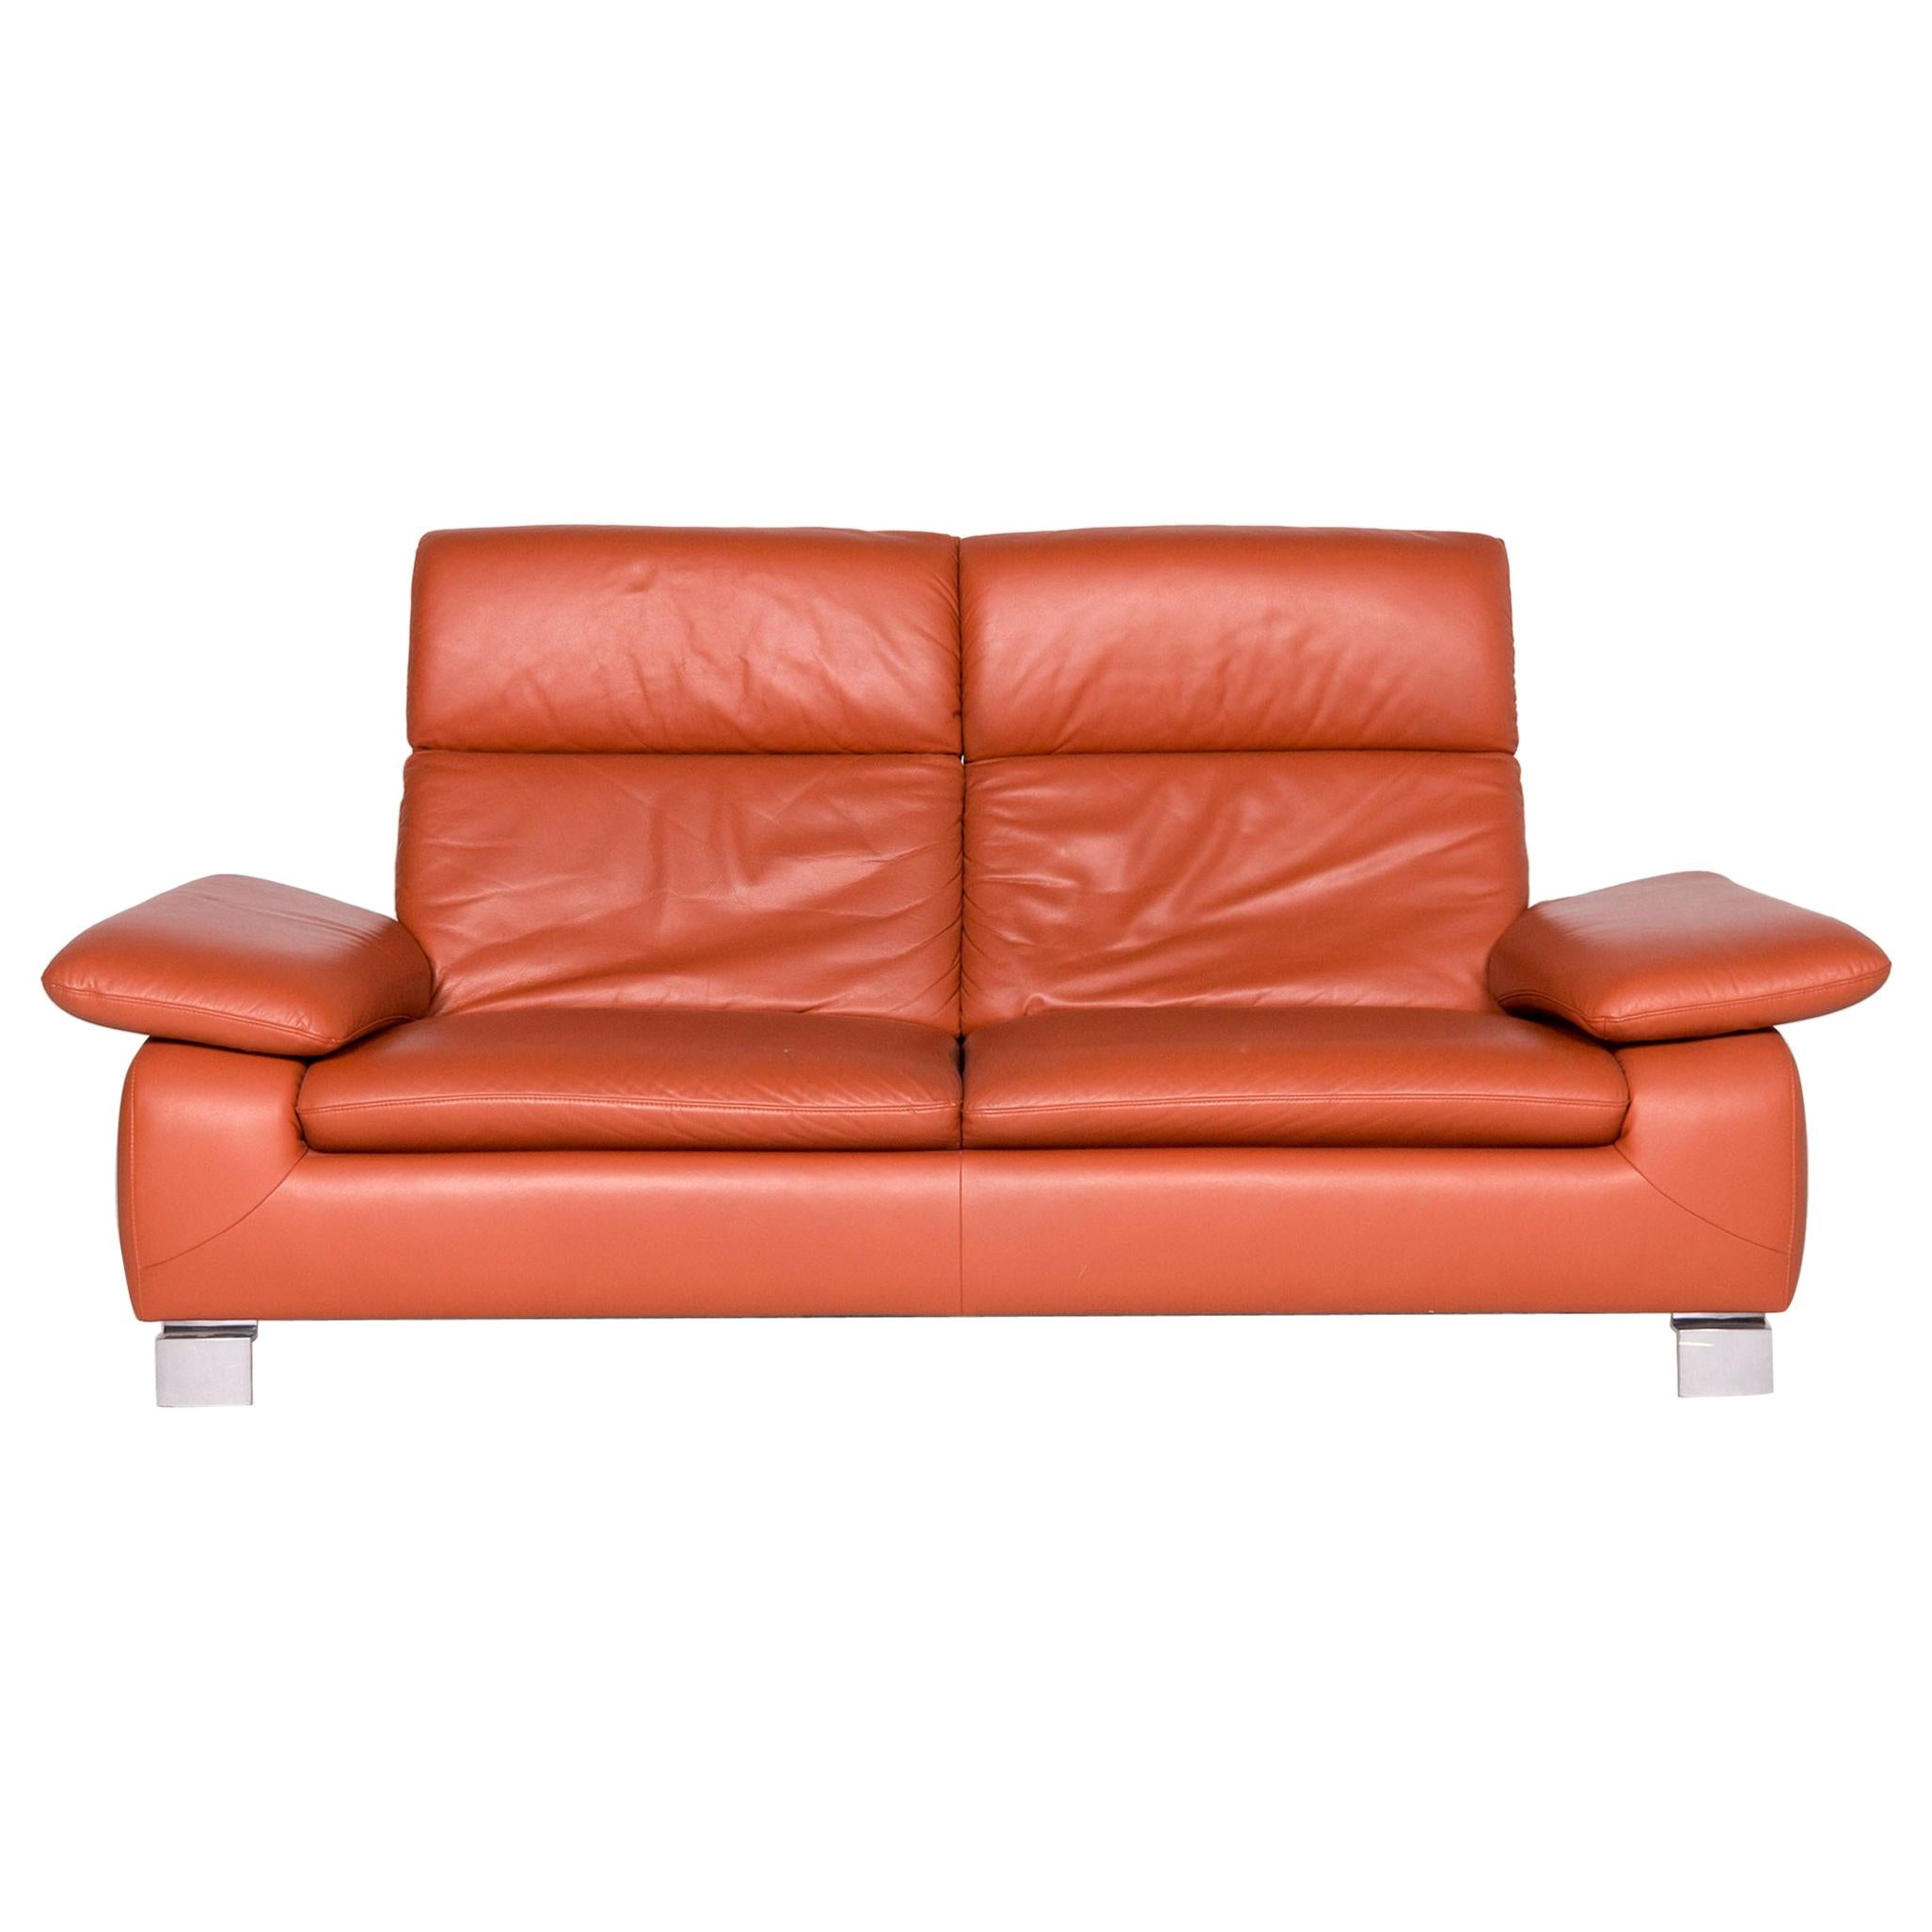 Ewald Schillig Designer Leather Sofa Orange Three-Seat Couch